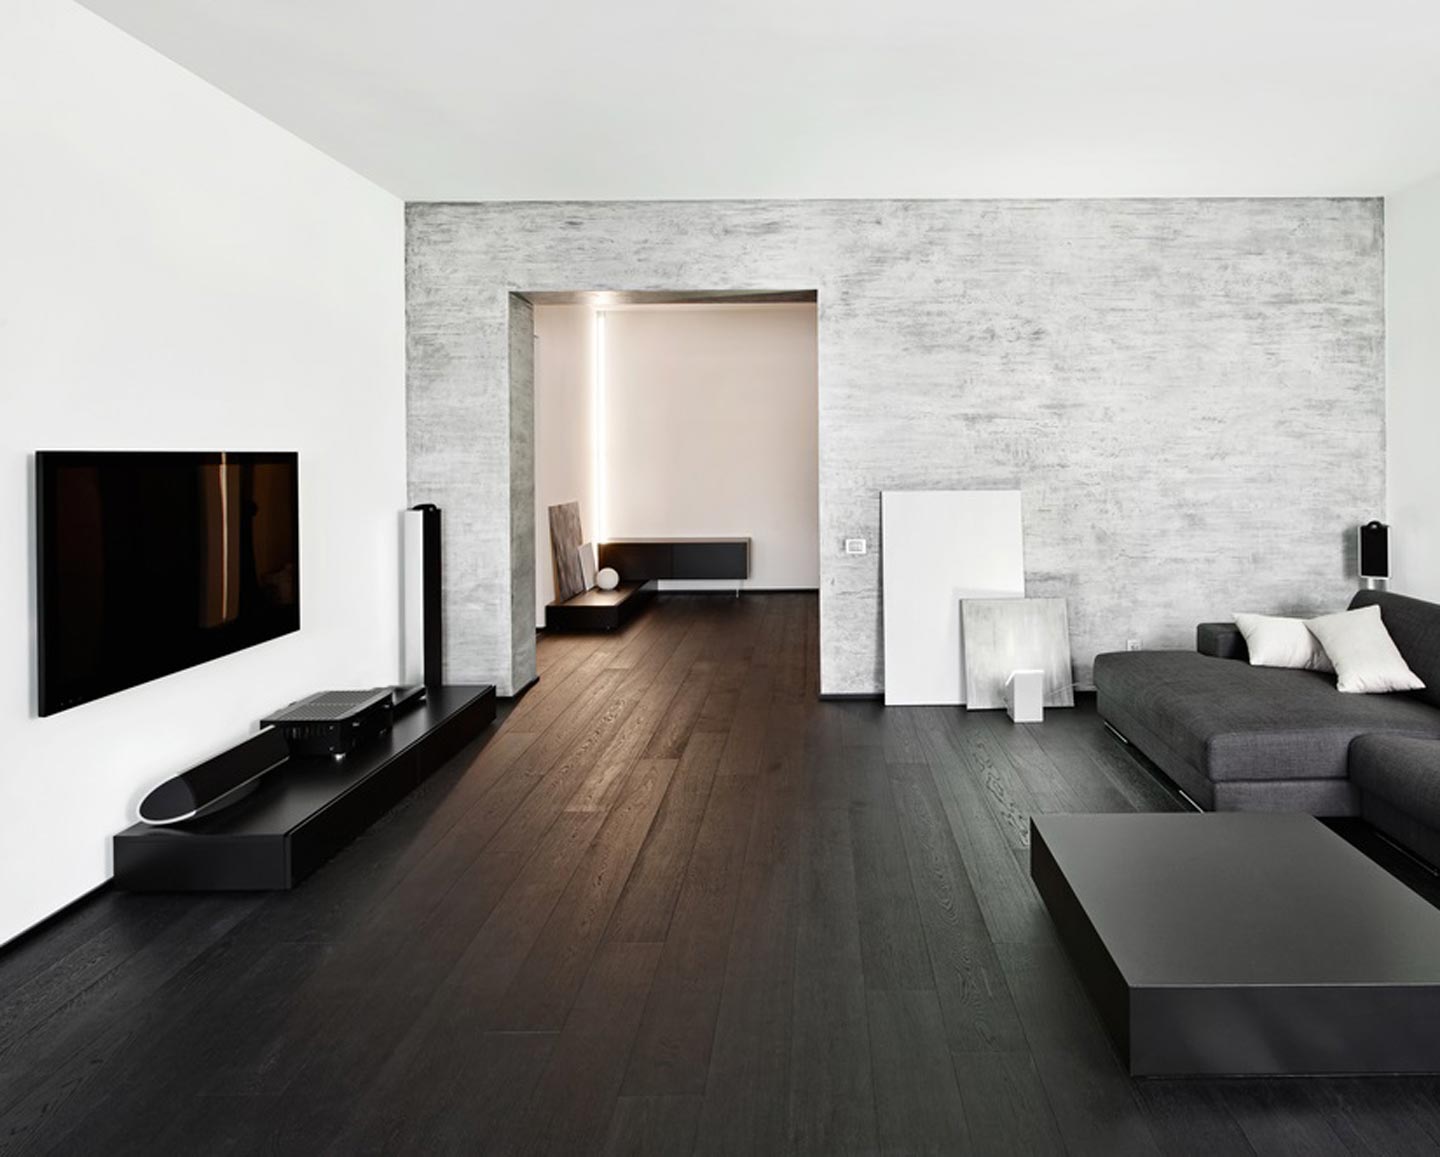 Lantai kayu gelap di pedalaman dewan dengan gaya minimalis